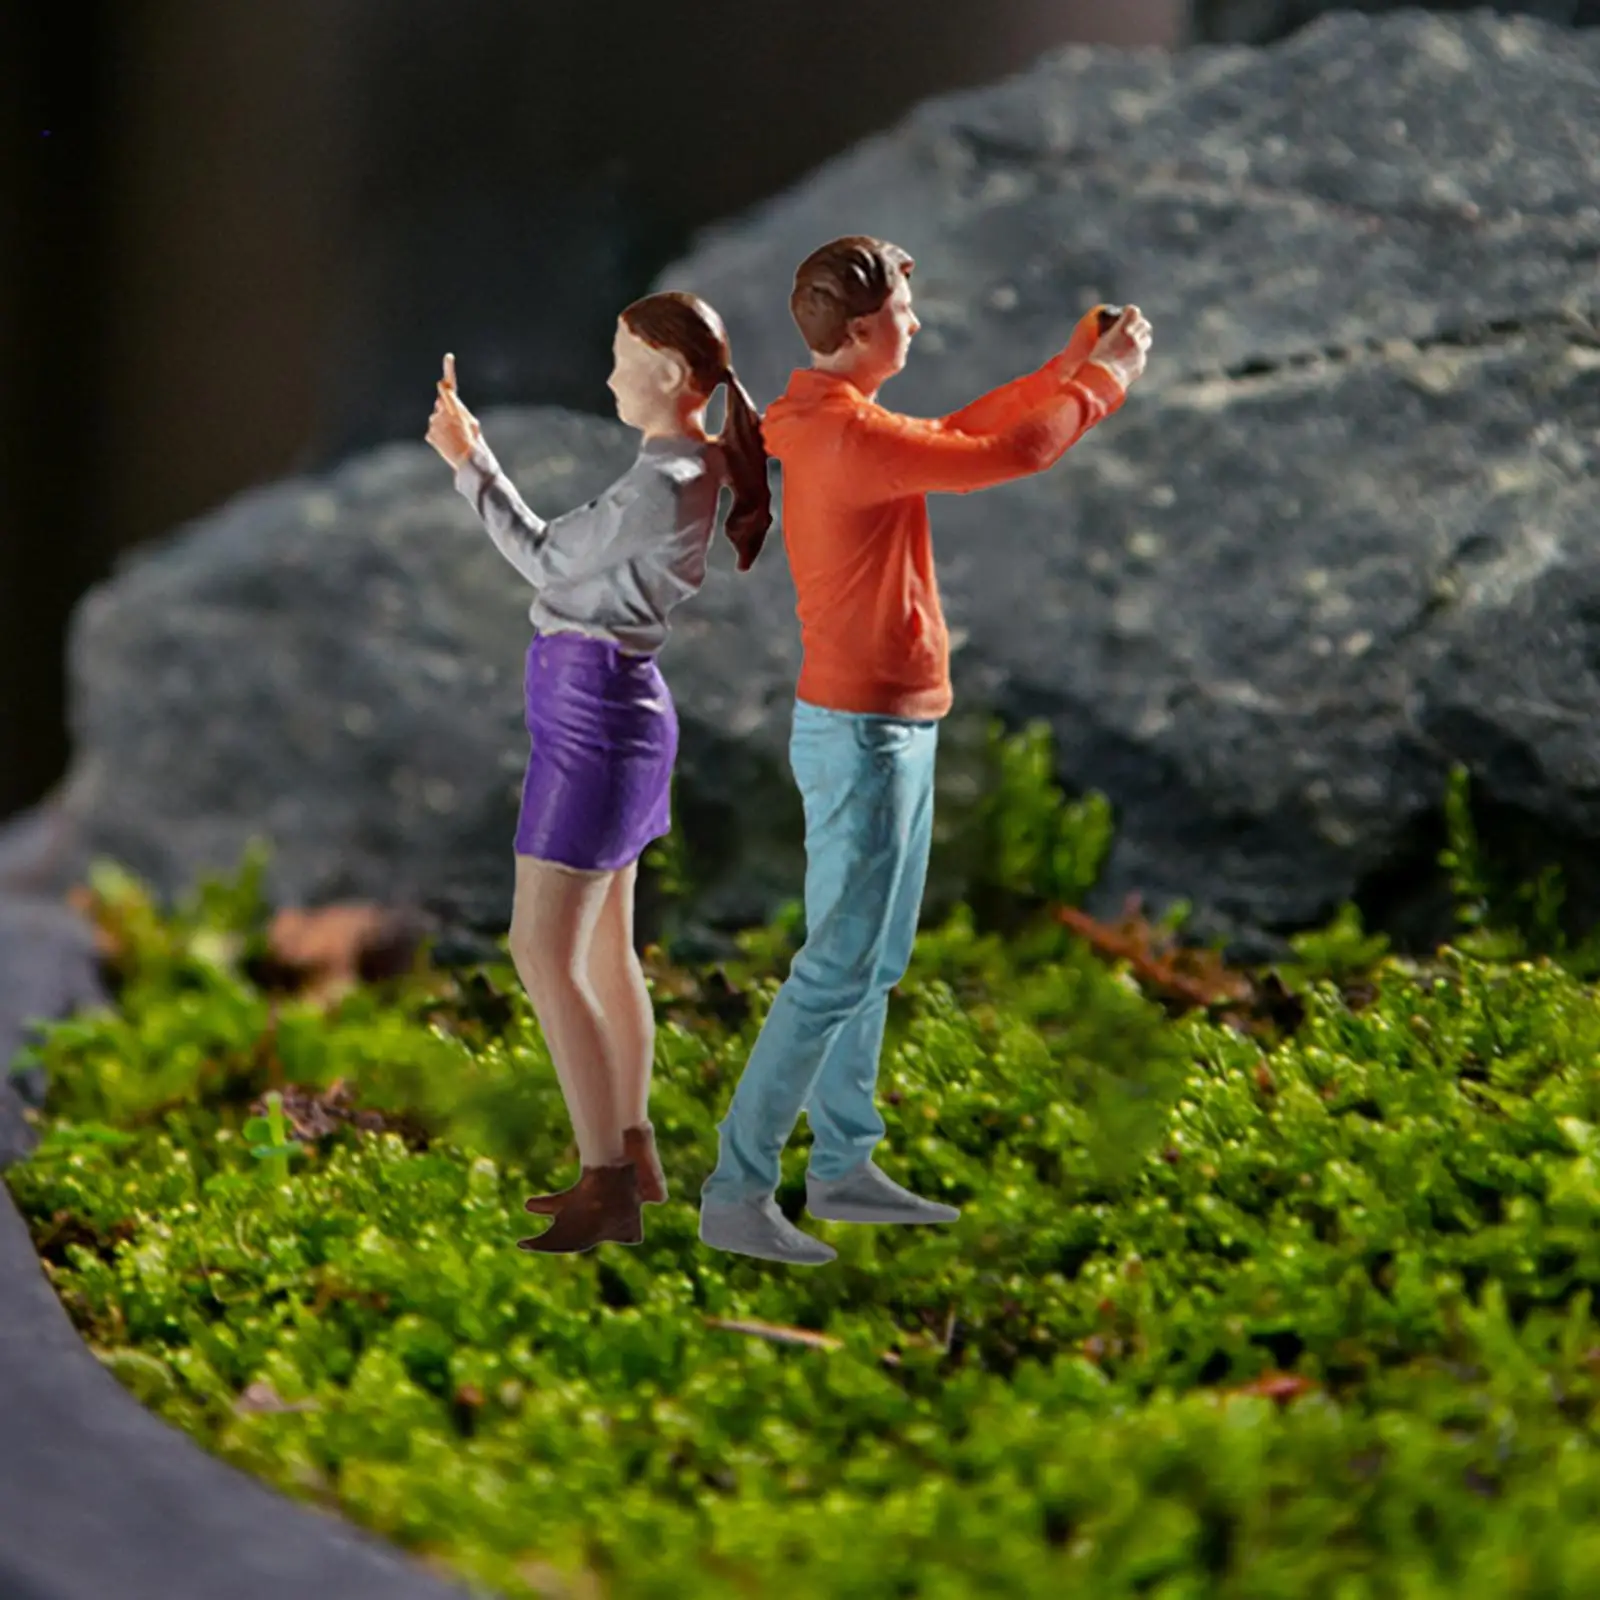 2x Miniature 1/64 Couple Figures Street Couple Figures for Diorama Photography Props Scenery Landscape Dollhouse Decoration